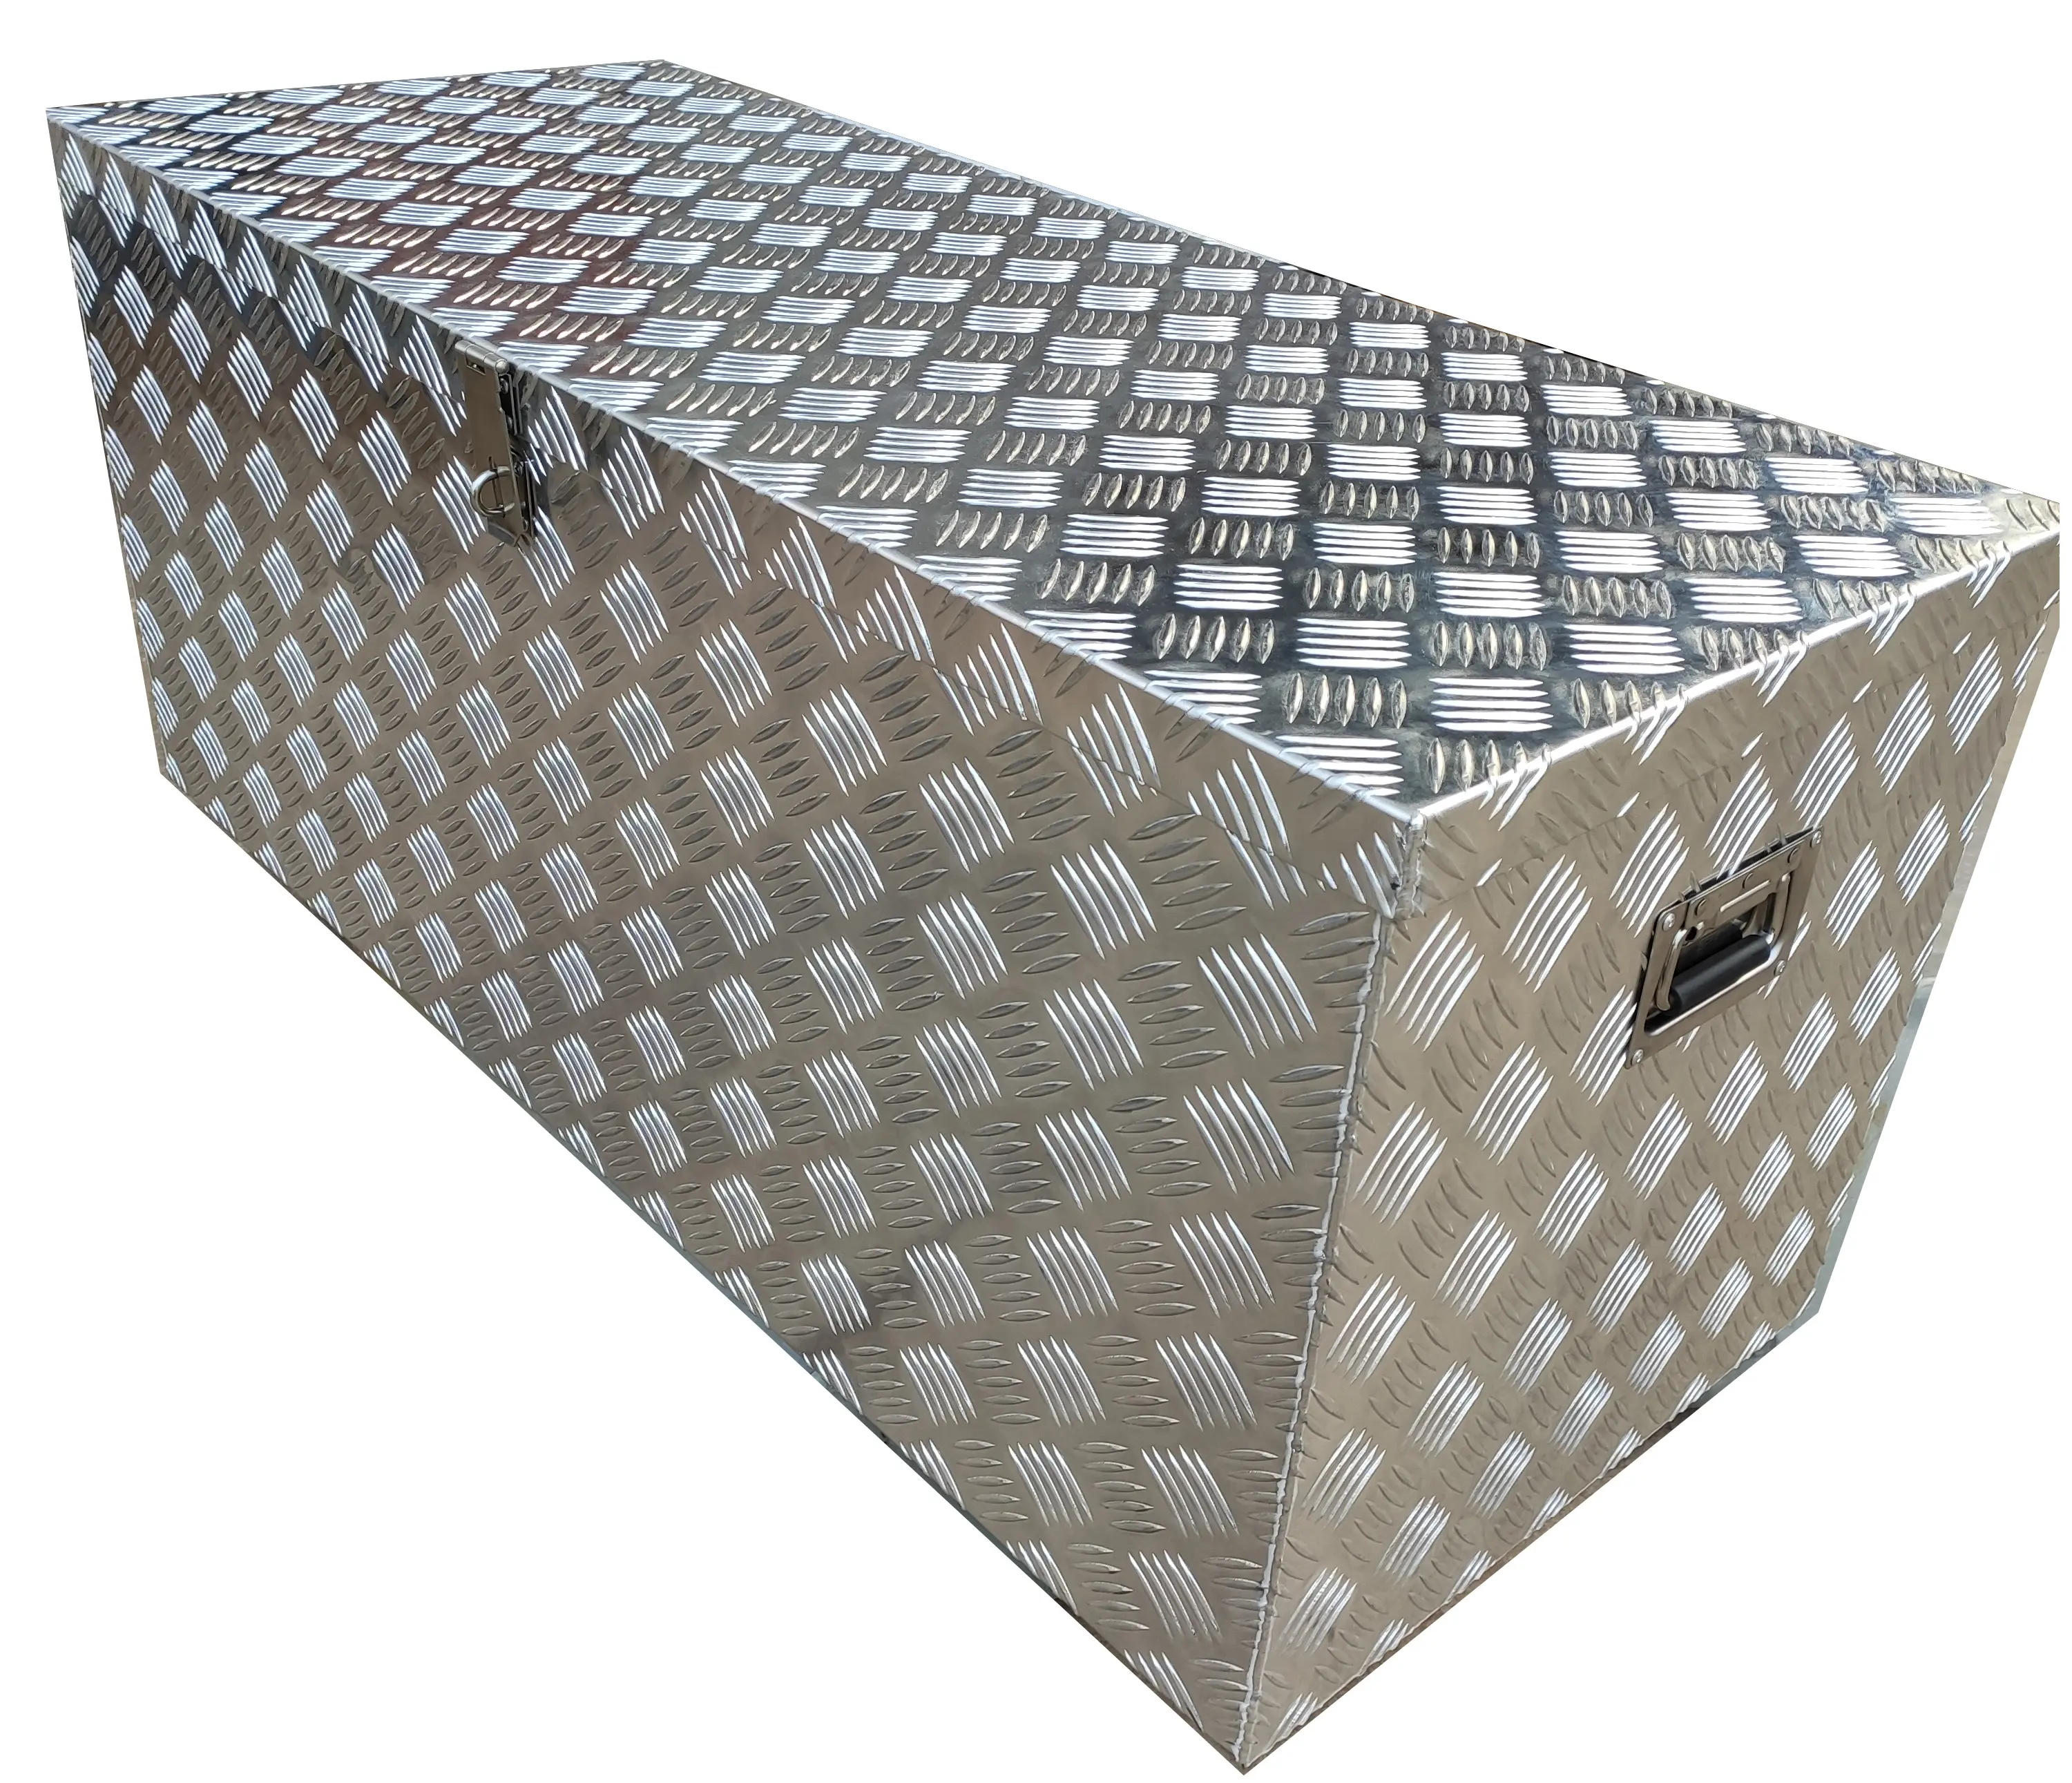 Aluminum boxes for garage storage